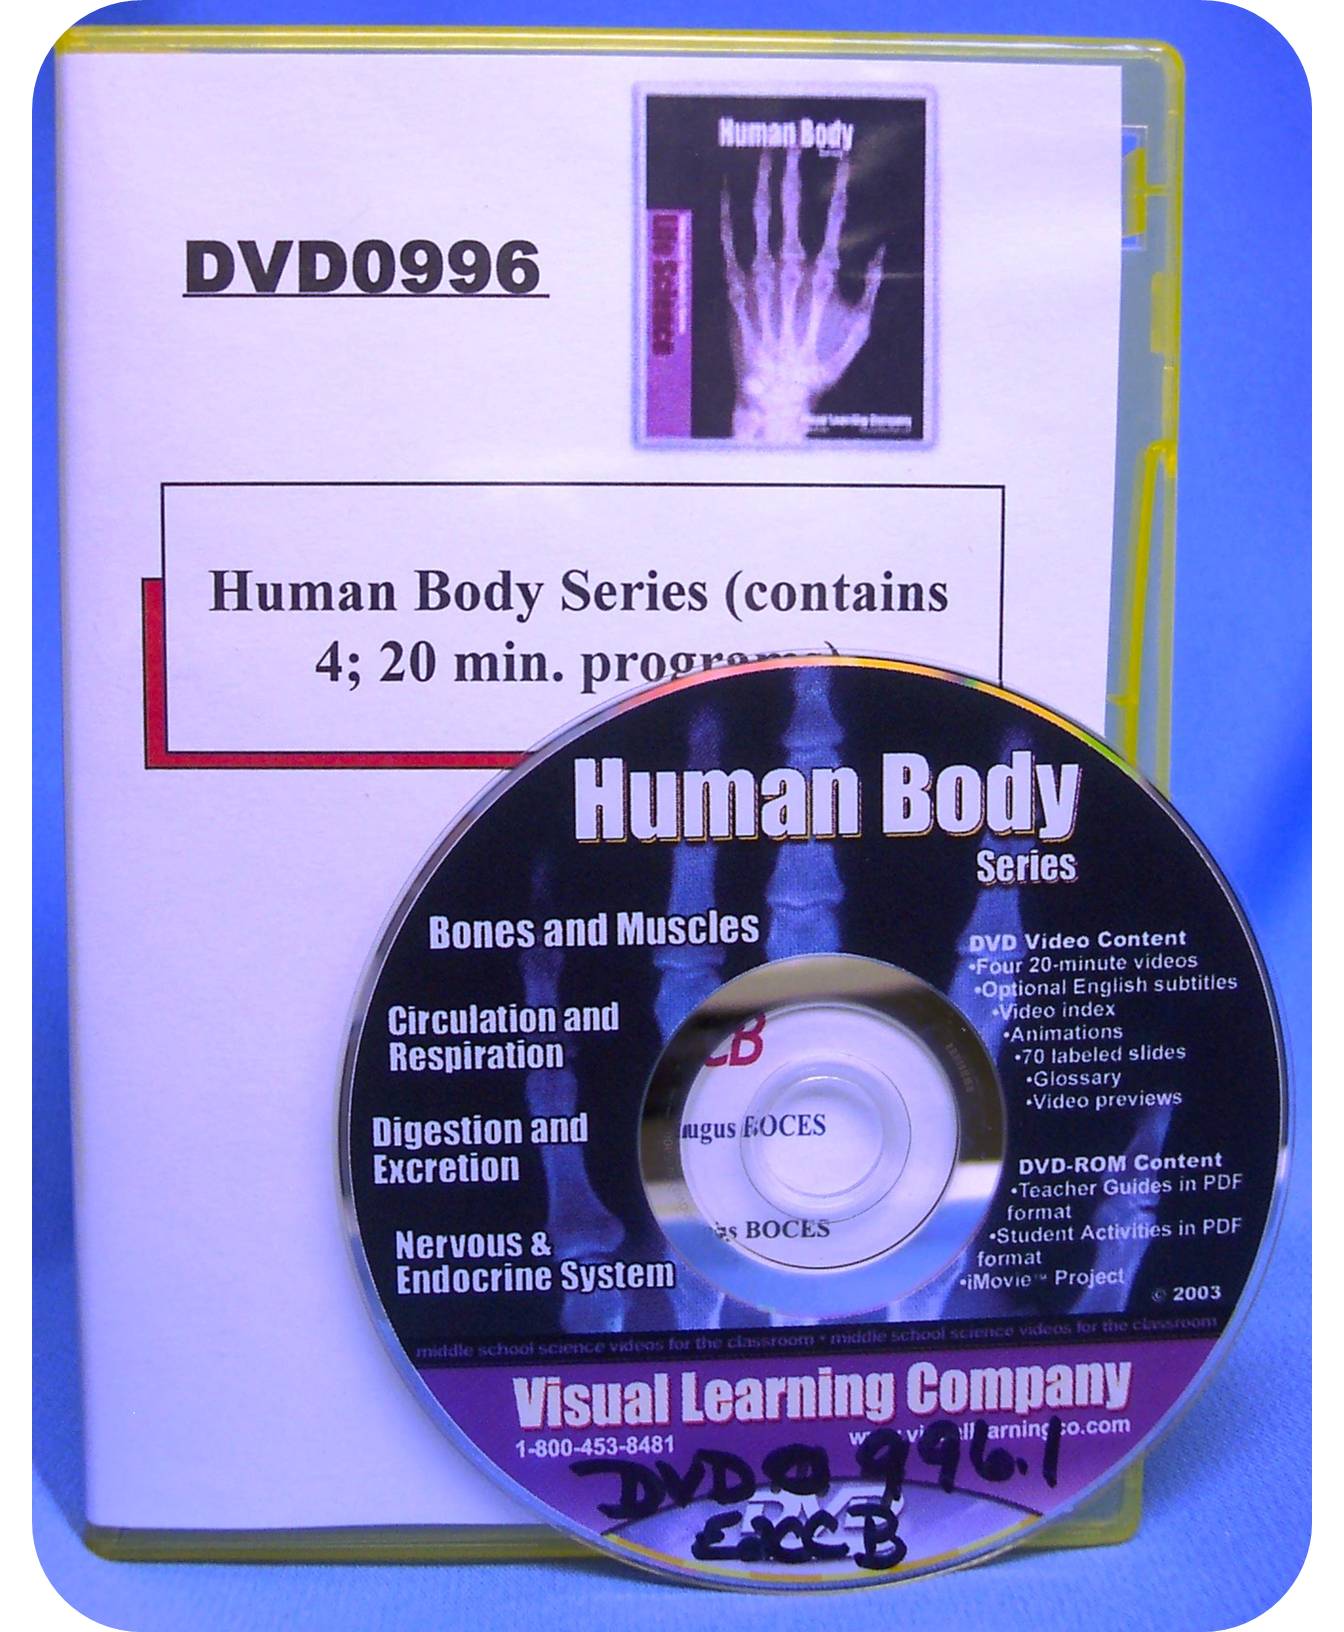 Human Body Series (contains 4; 20 min. programs)